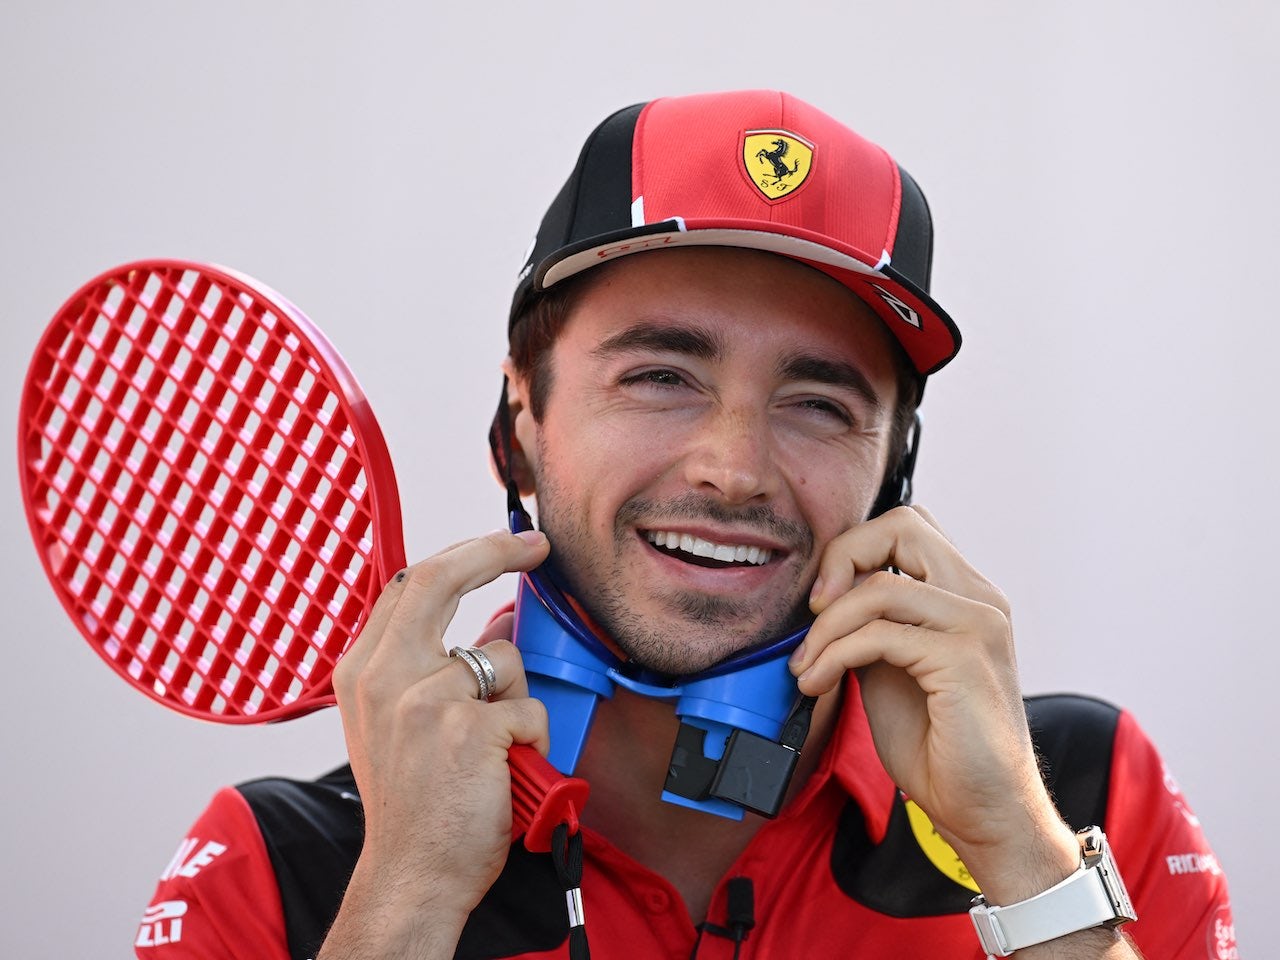 Leclerc could escape Ferrari contract - Marko